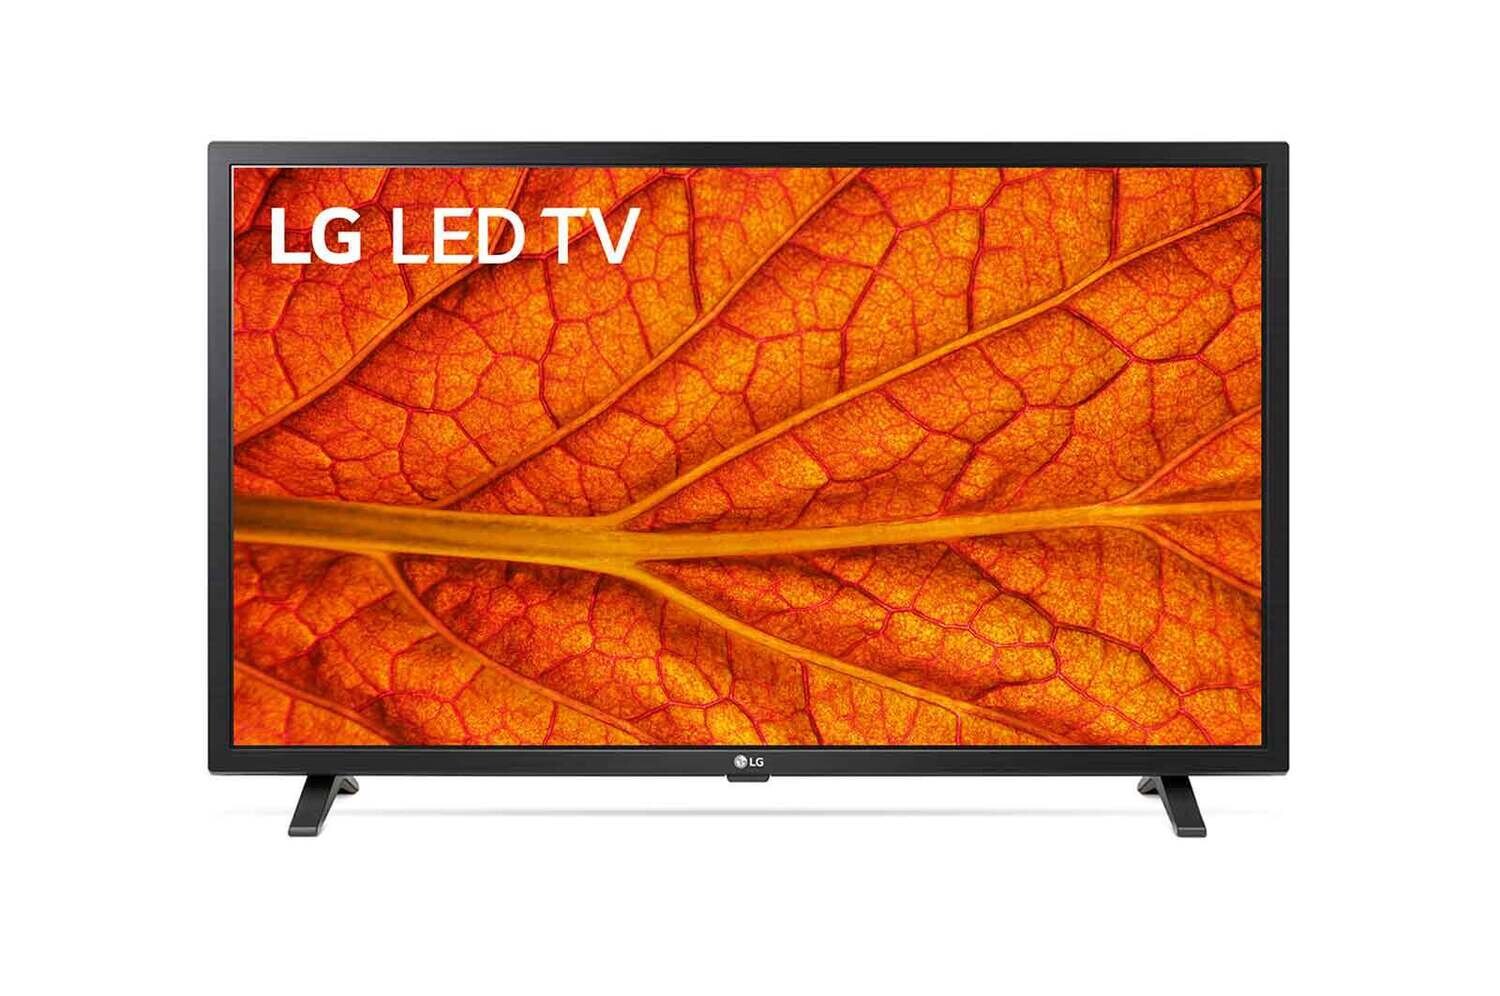 LG LED SMART TV 32'' Serie LM637 - Full HD Smart TV NERA